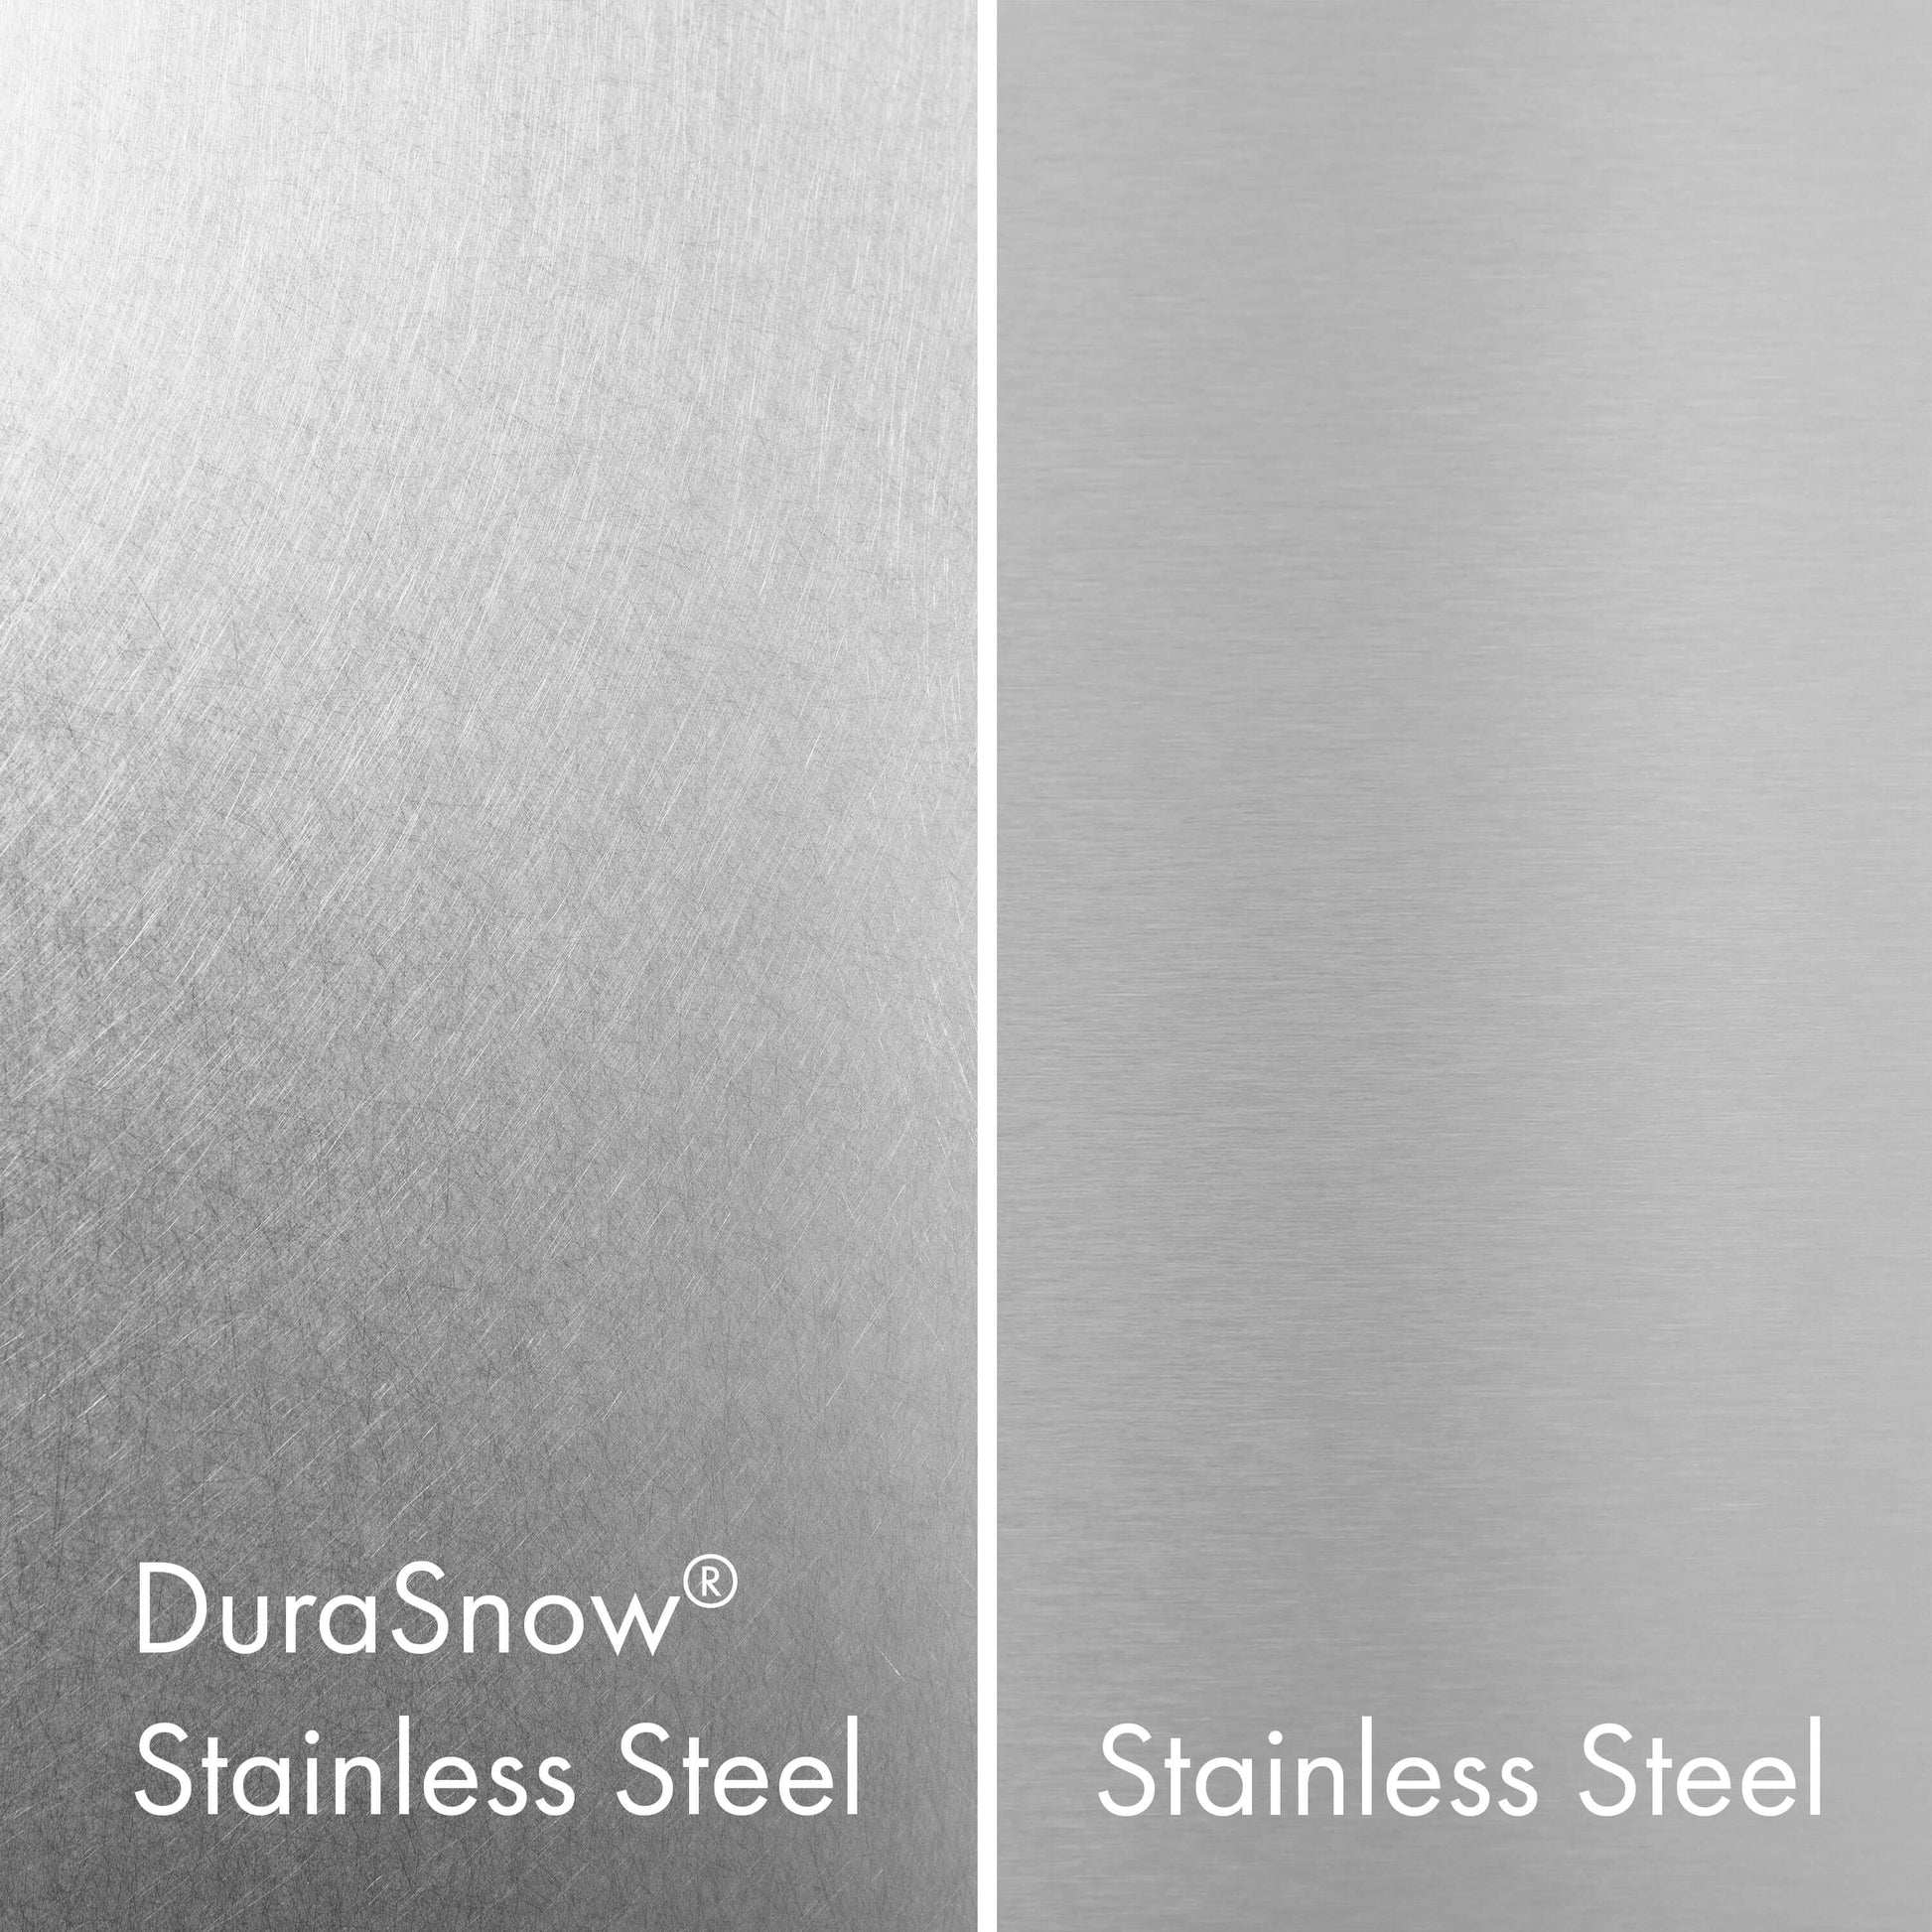 Panels & Handles Only - ZLINE 30" Refrigerator Panels in DuraSnow Stainless Steel